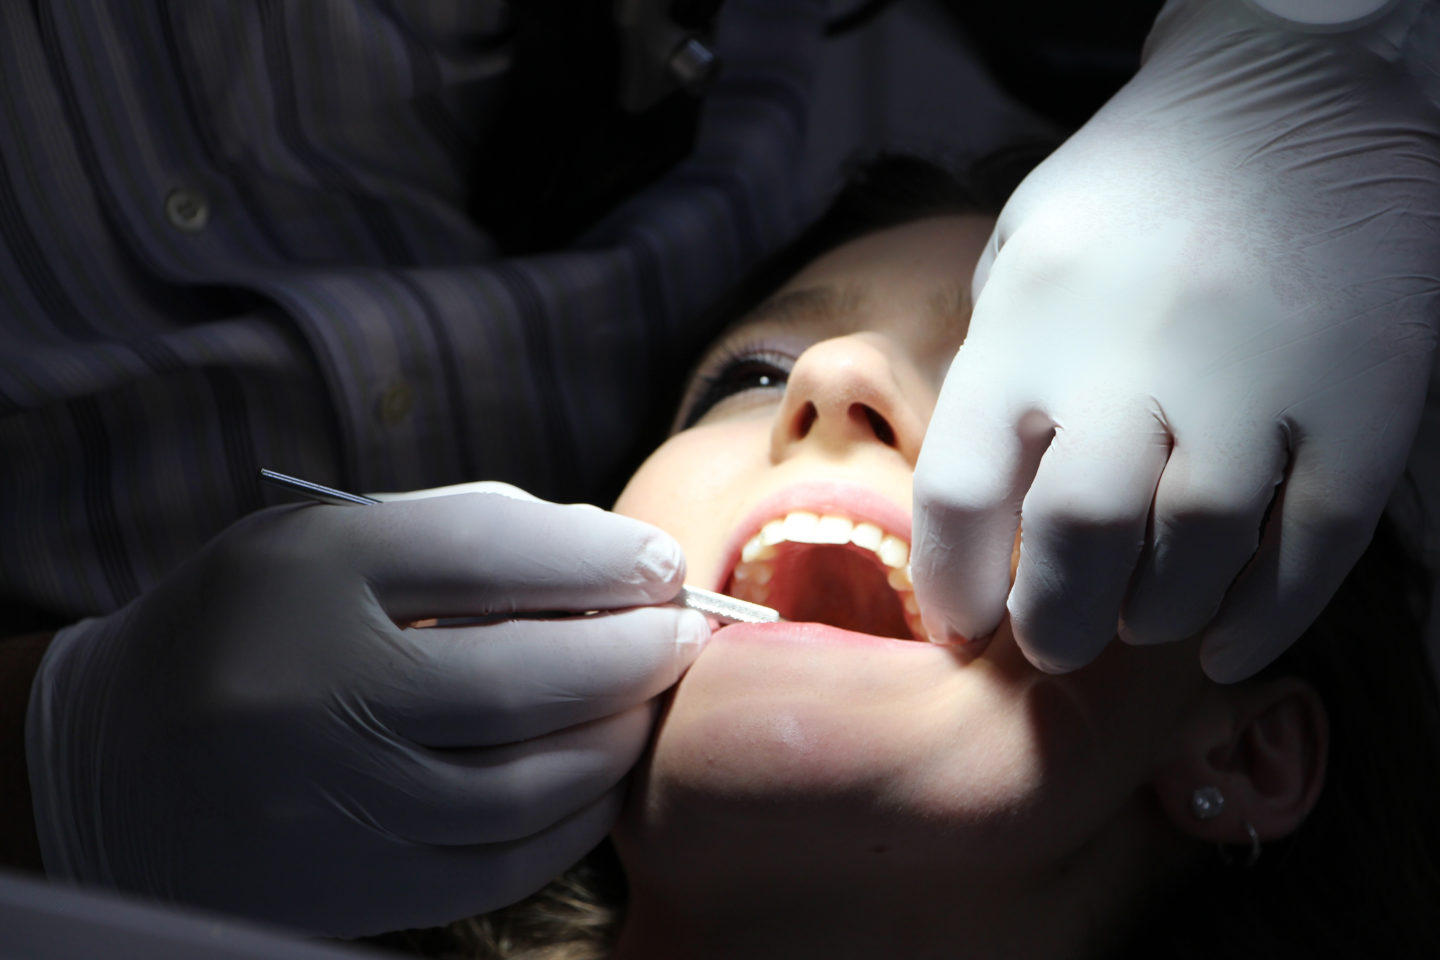 Woman at the Dentist